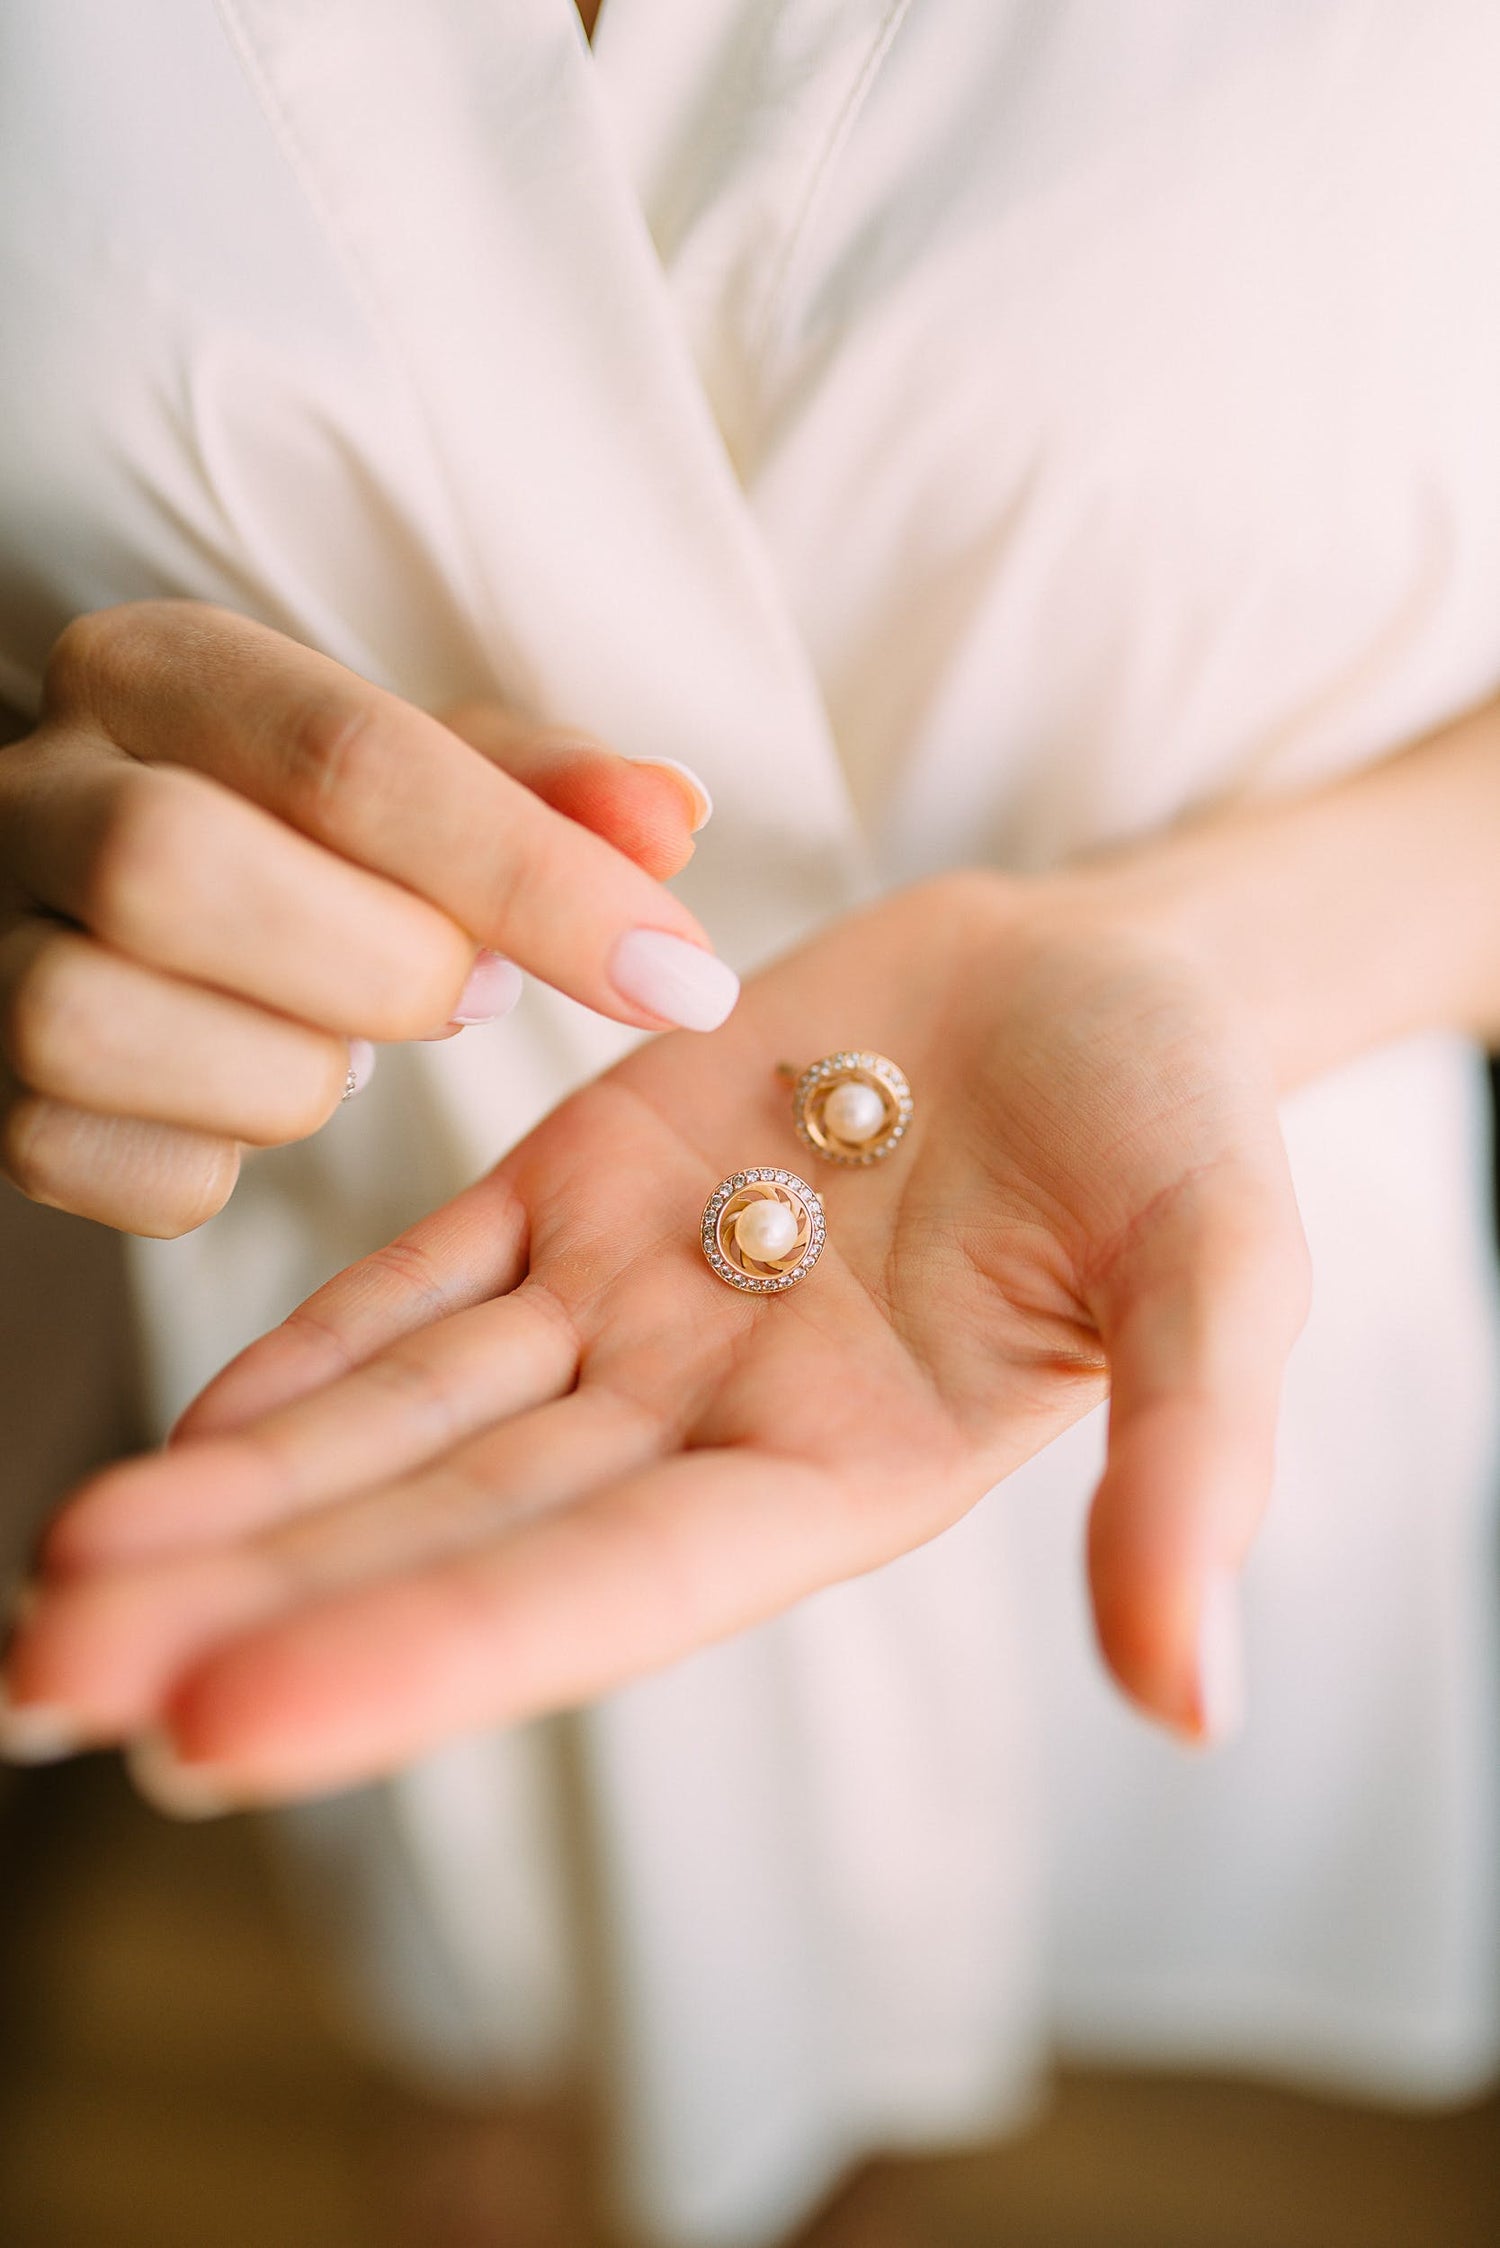 Pearl earrings held on a palm